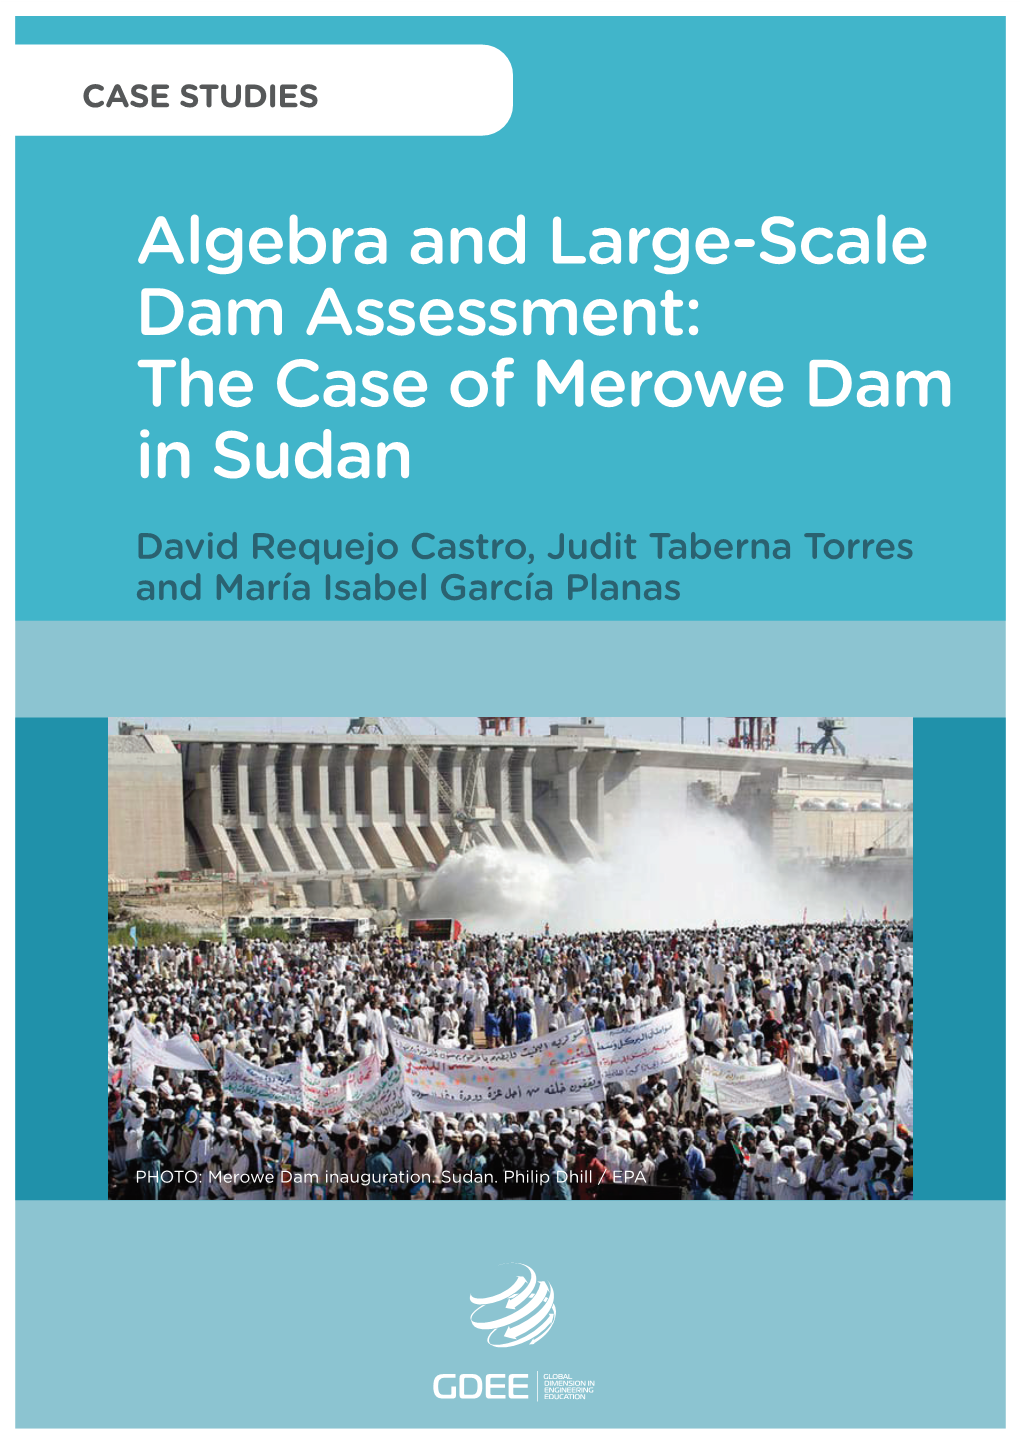 The Case of Merowe Dam in Sudan